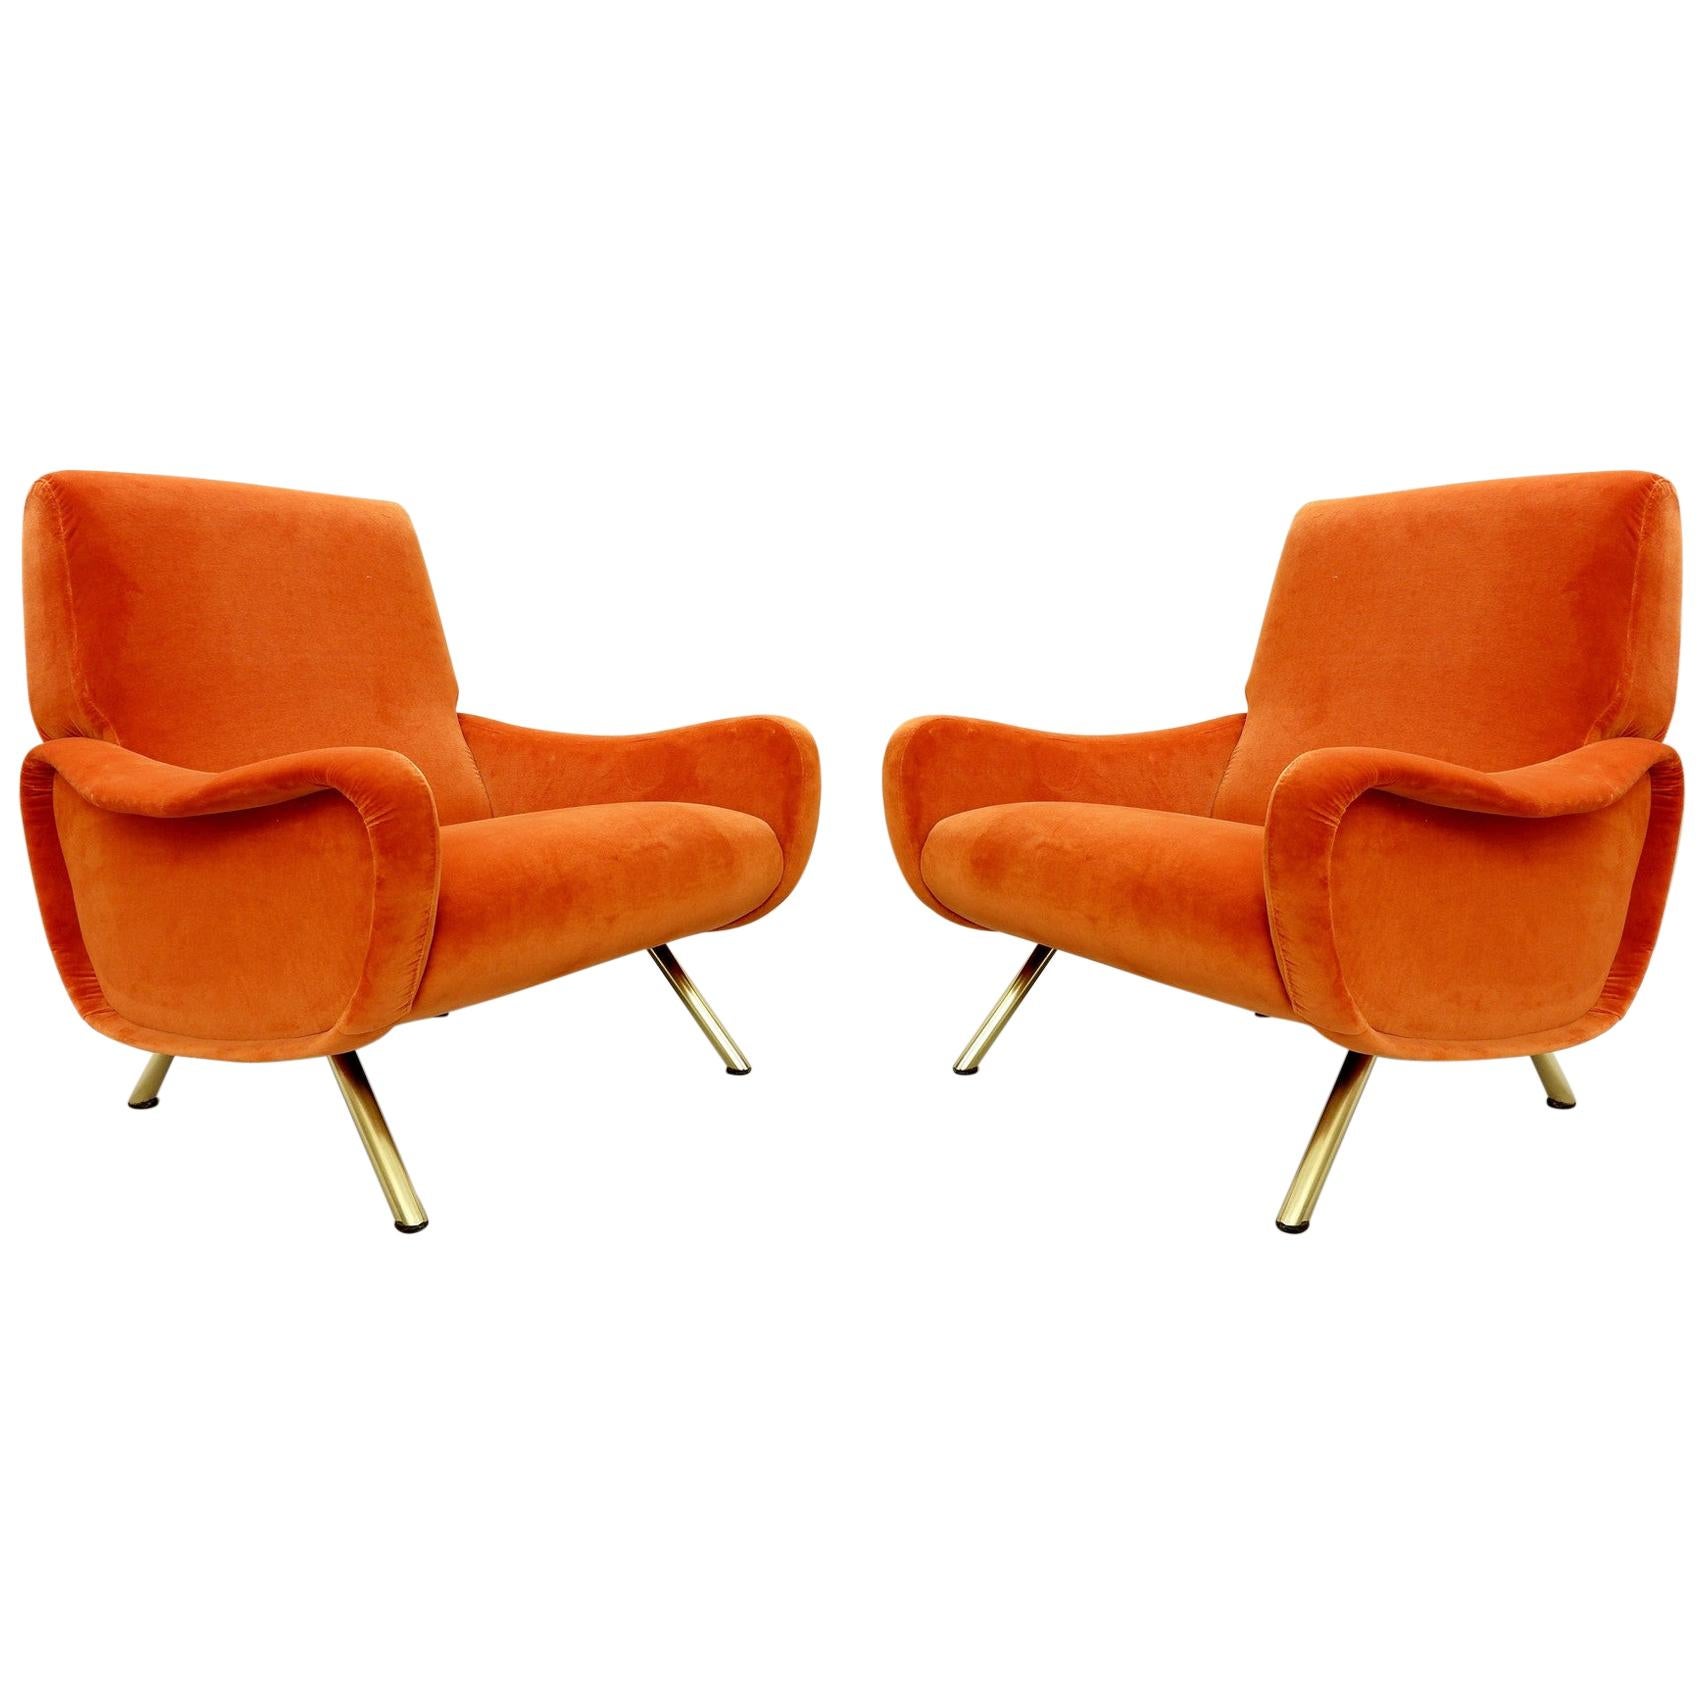 Pair of 'Lady' Armchairs, Marco Zanuso for Arflex, New Orange Velvet Ulphostery